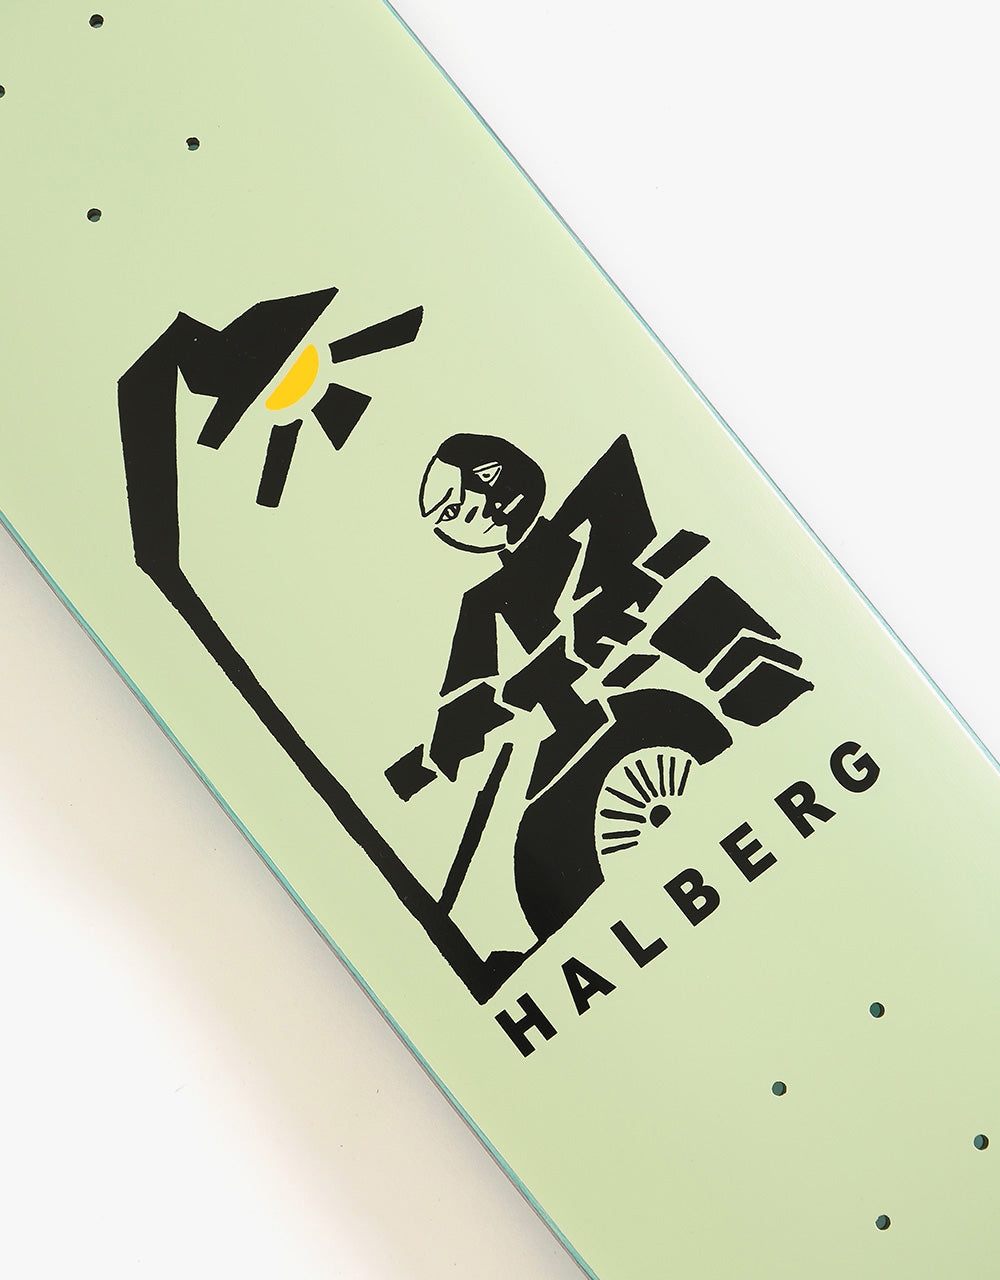 Polar Halberg Insomnia Skateboard Deck - P2 Shape 8.5"